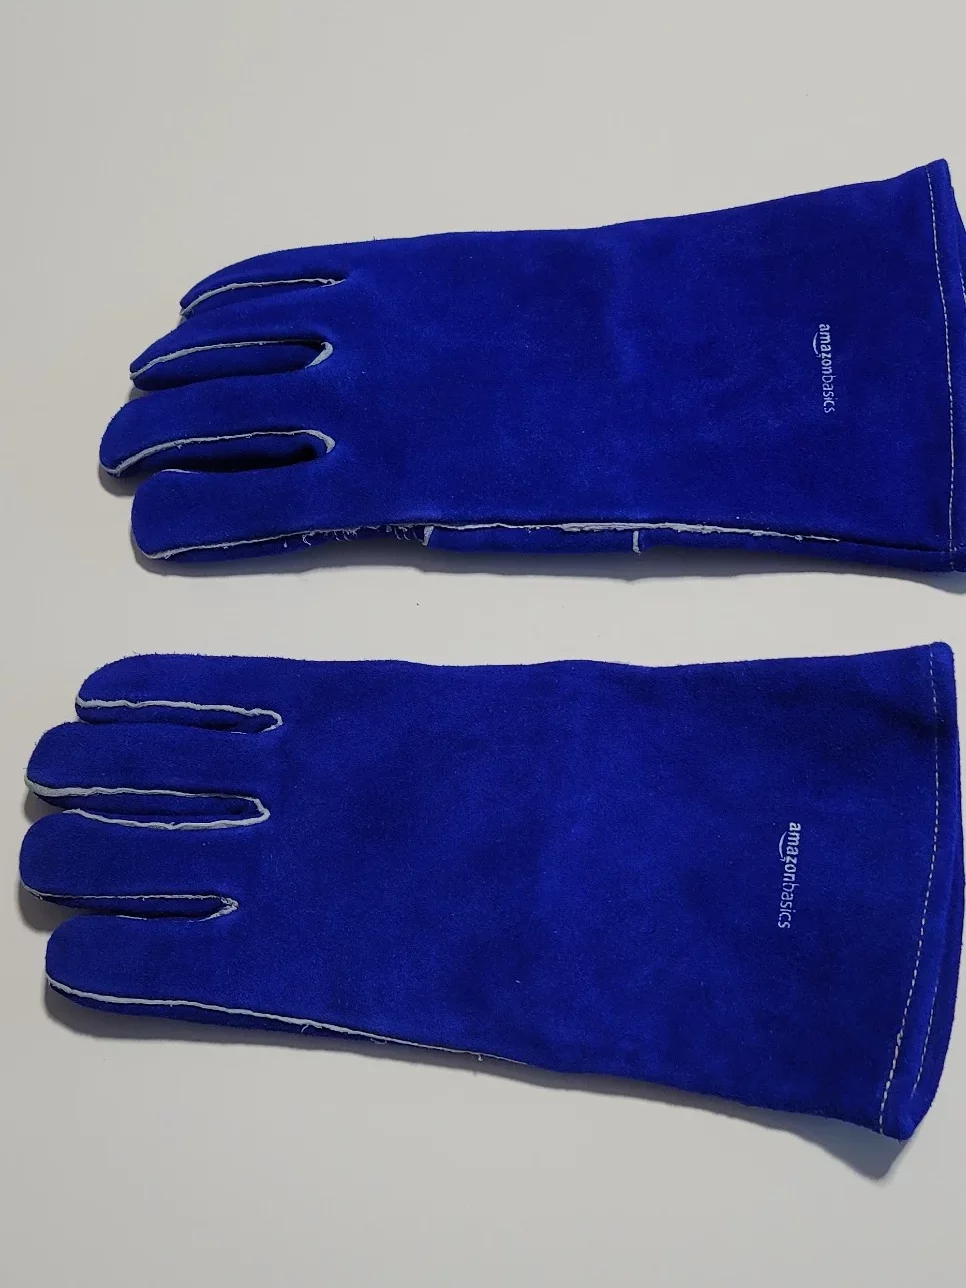 Amazon Basics Welding Gloves Overview 1 Edited